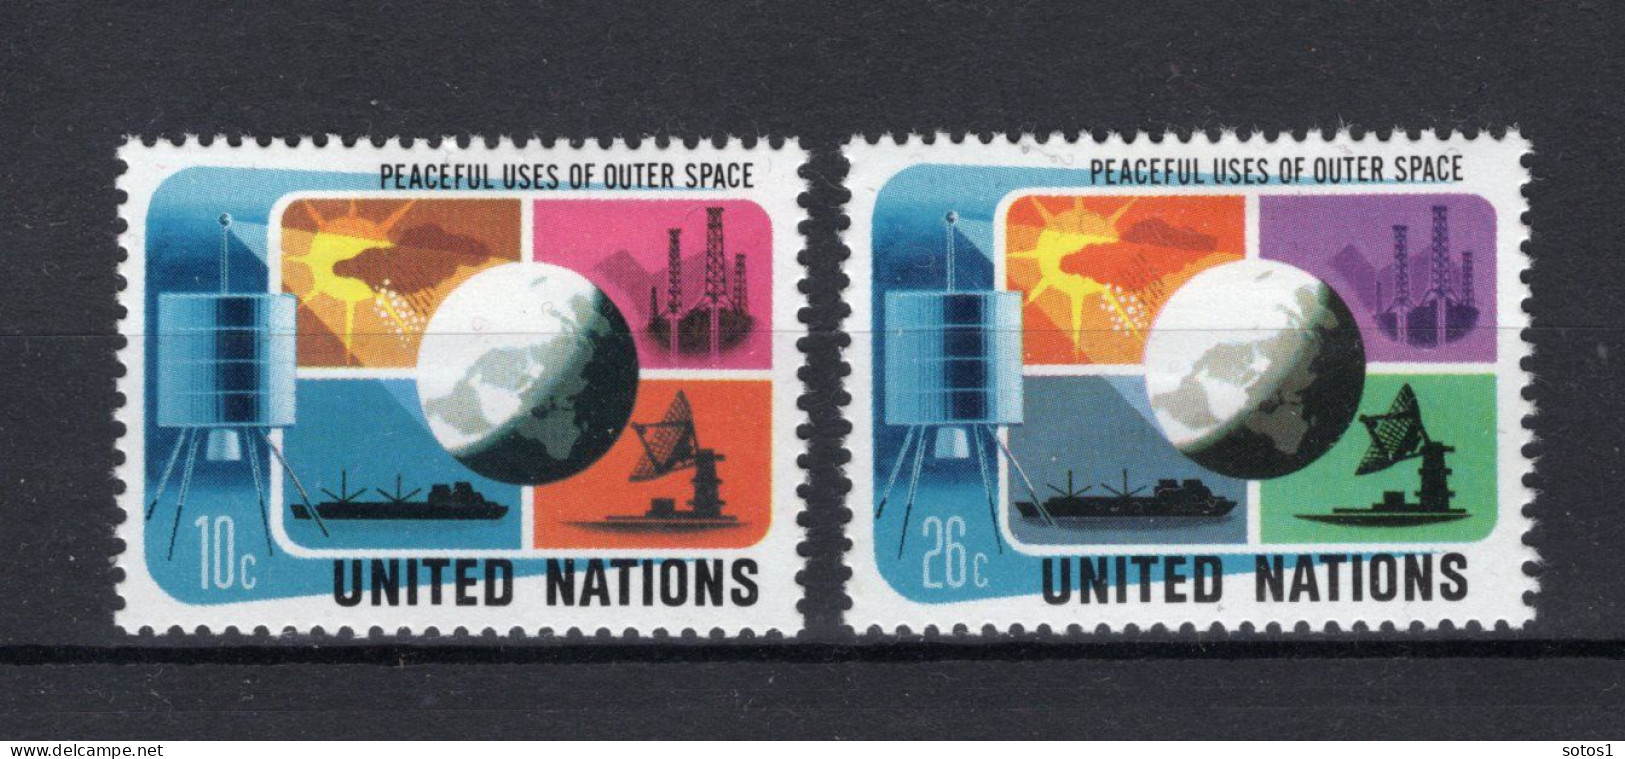 VERENIGDE NATIES-NEW YORK Yt. 249/250 MH 1975 - Unused Stamps